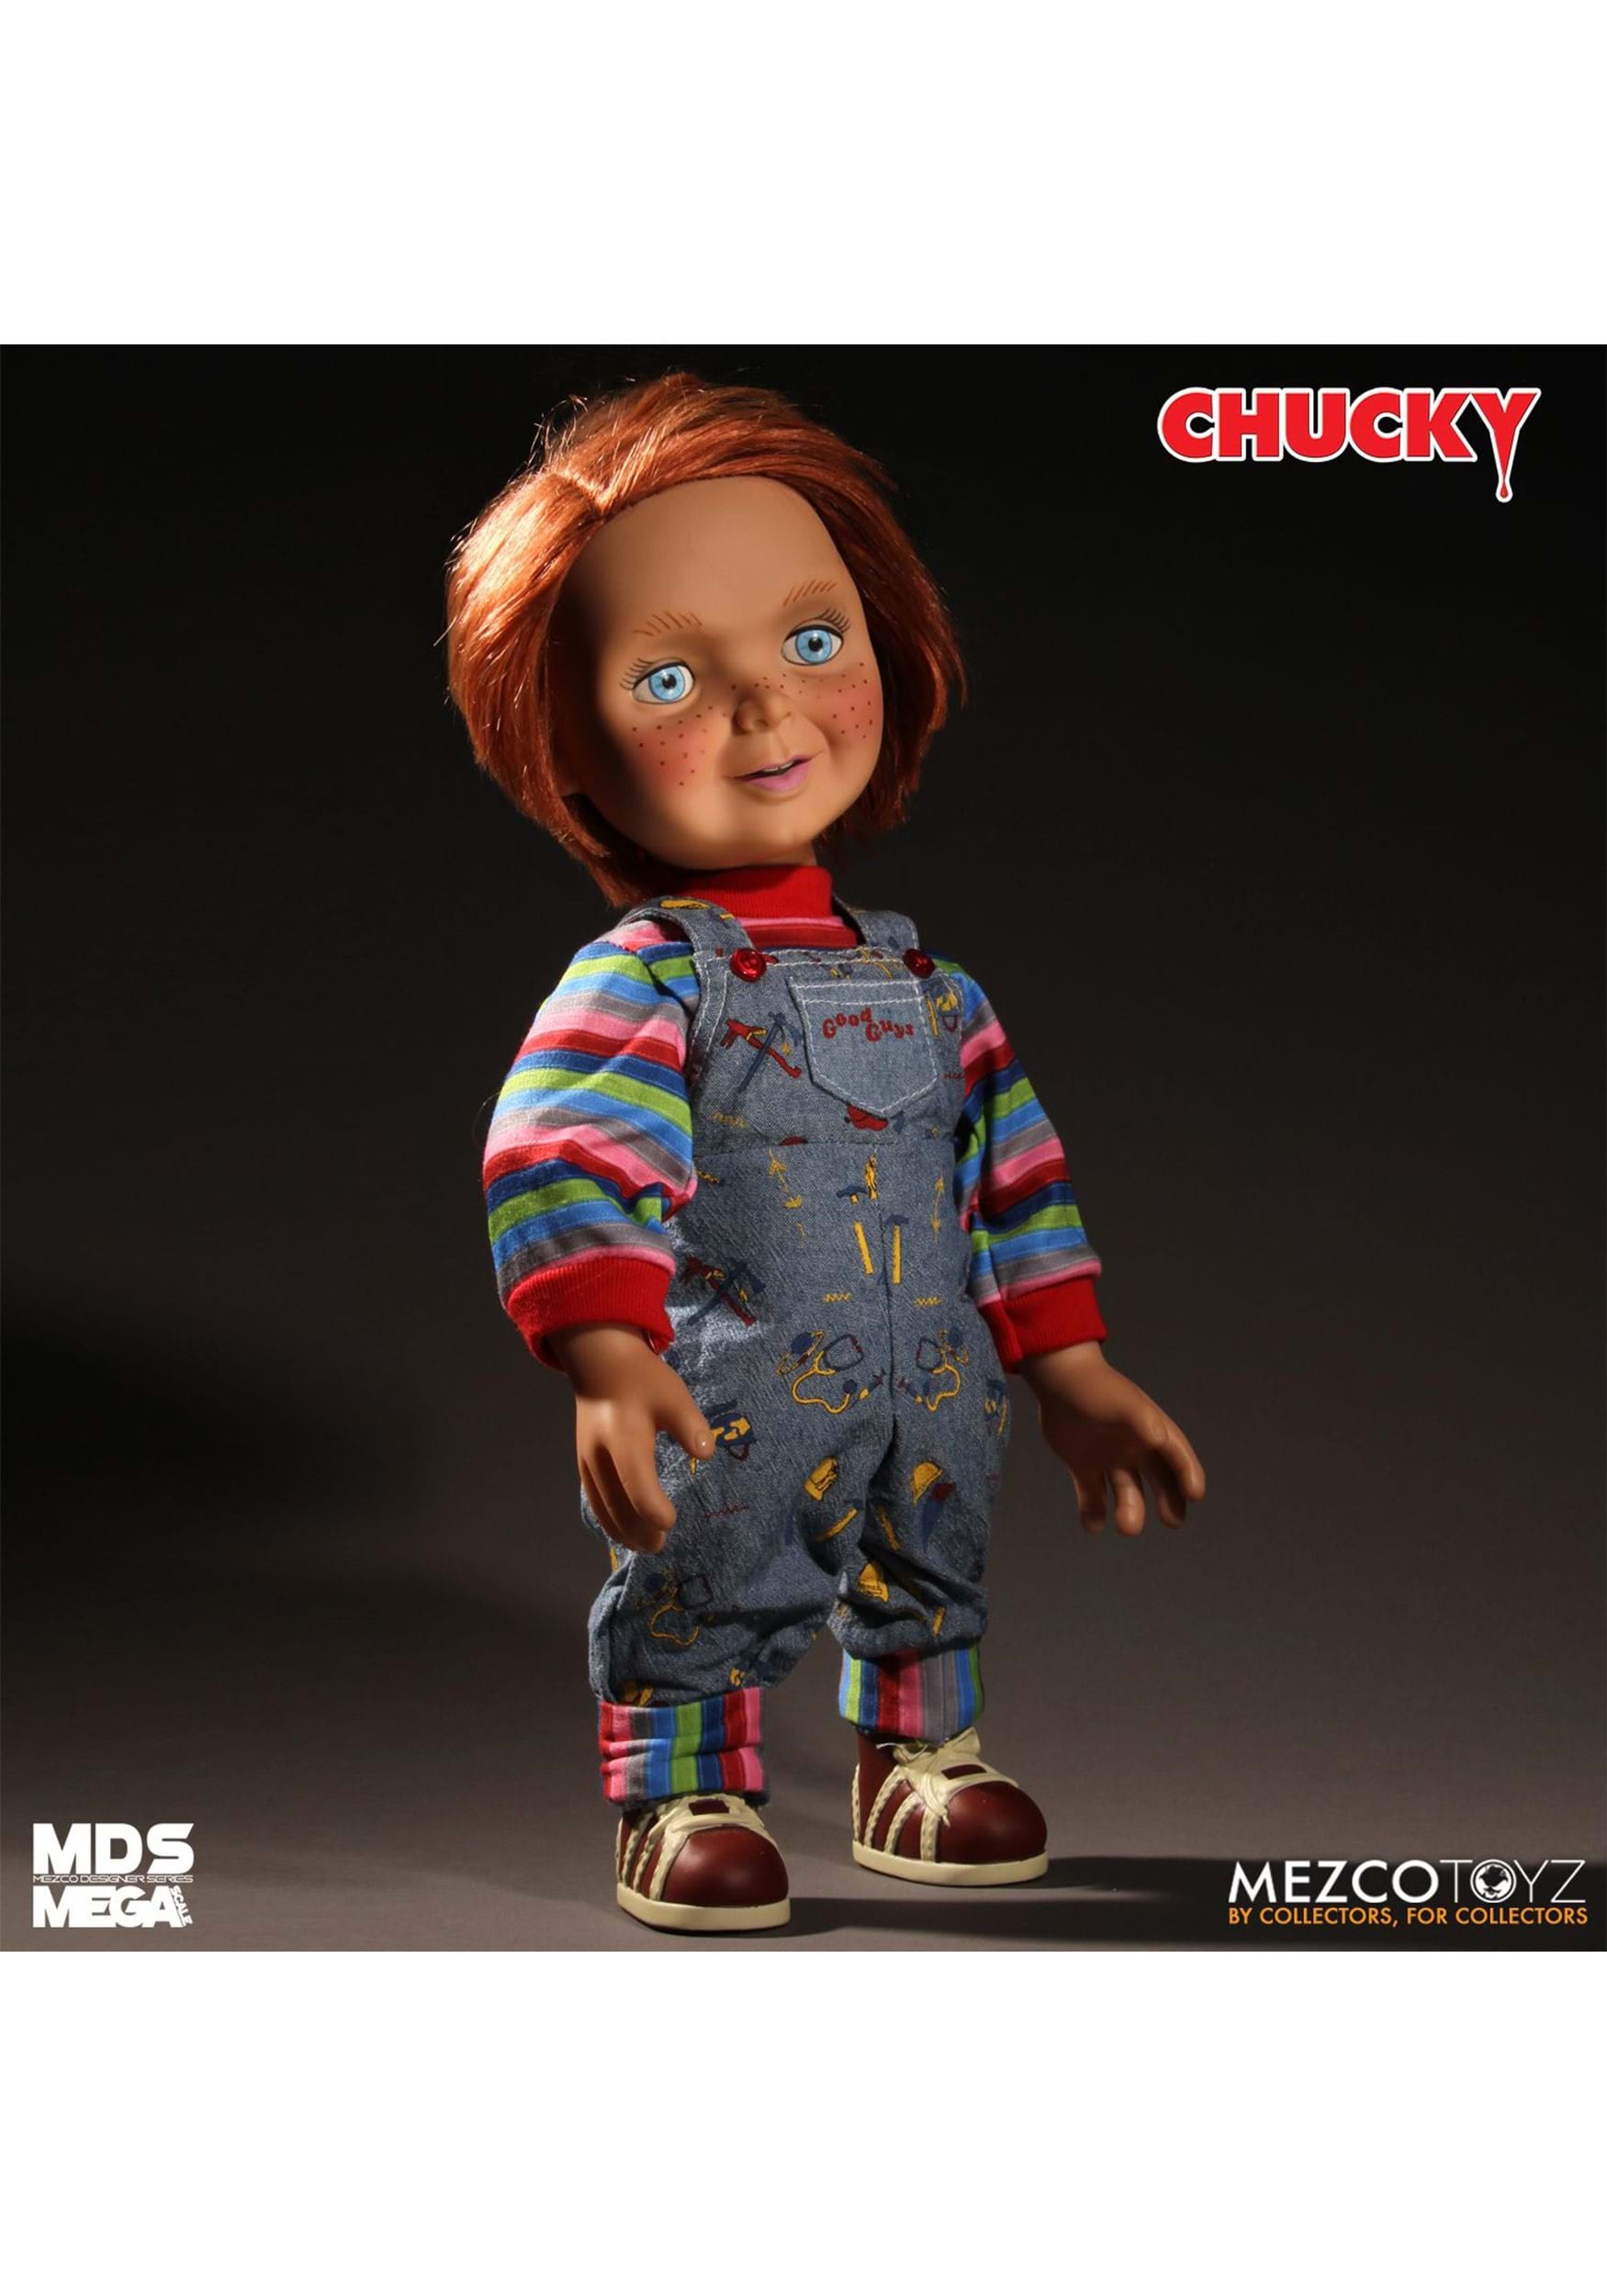 Chucky Good Guys 15 Talking Doll , Chucky Collectible Dolls